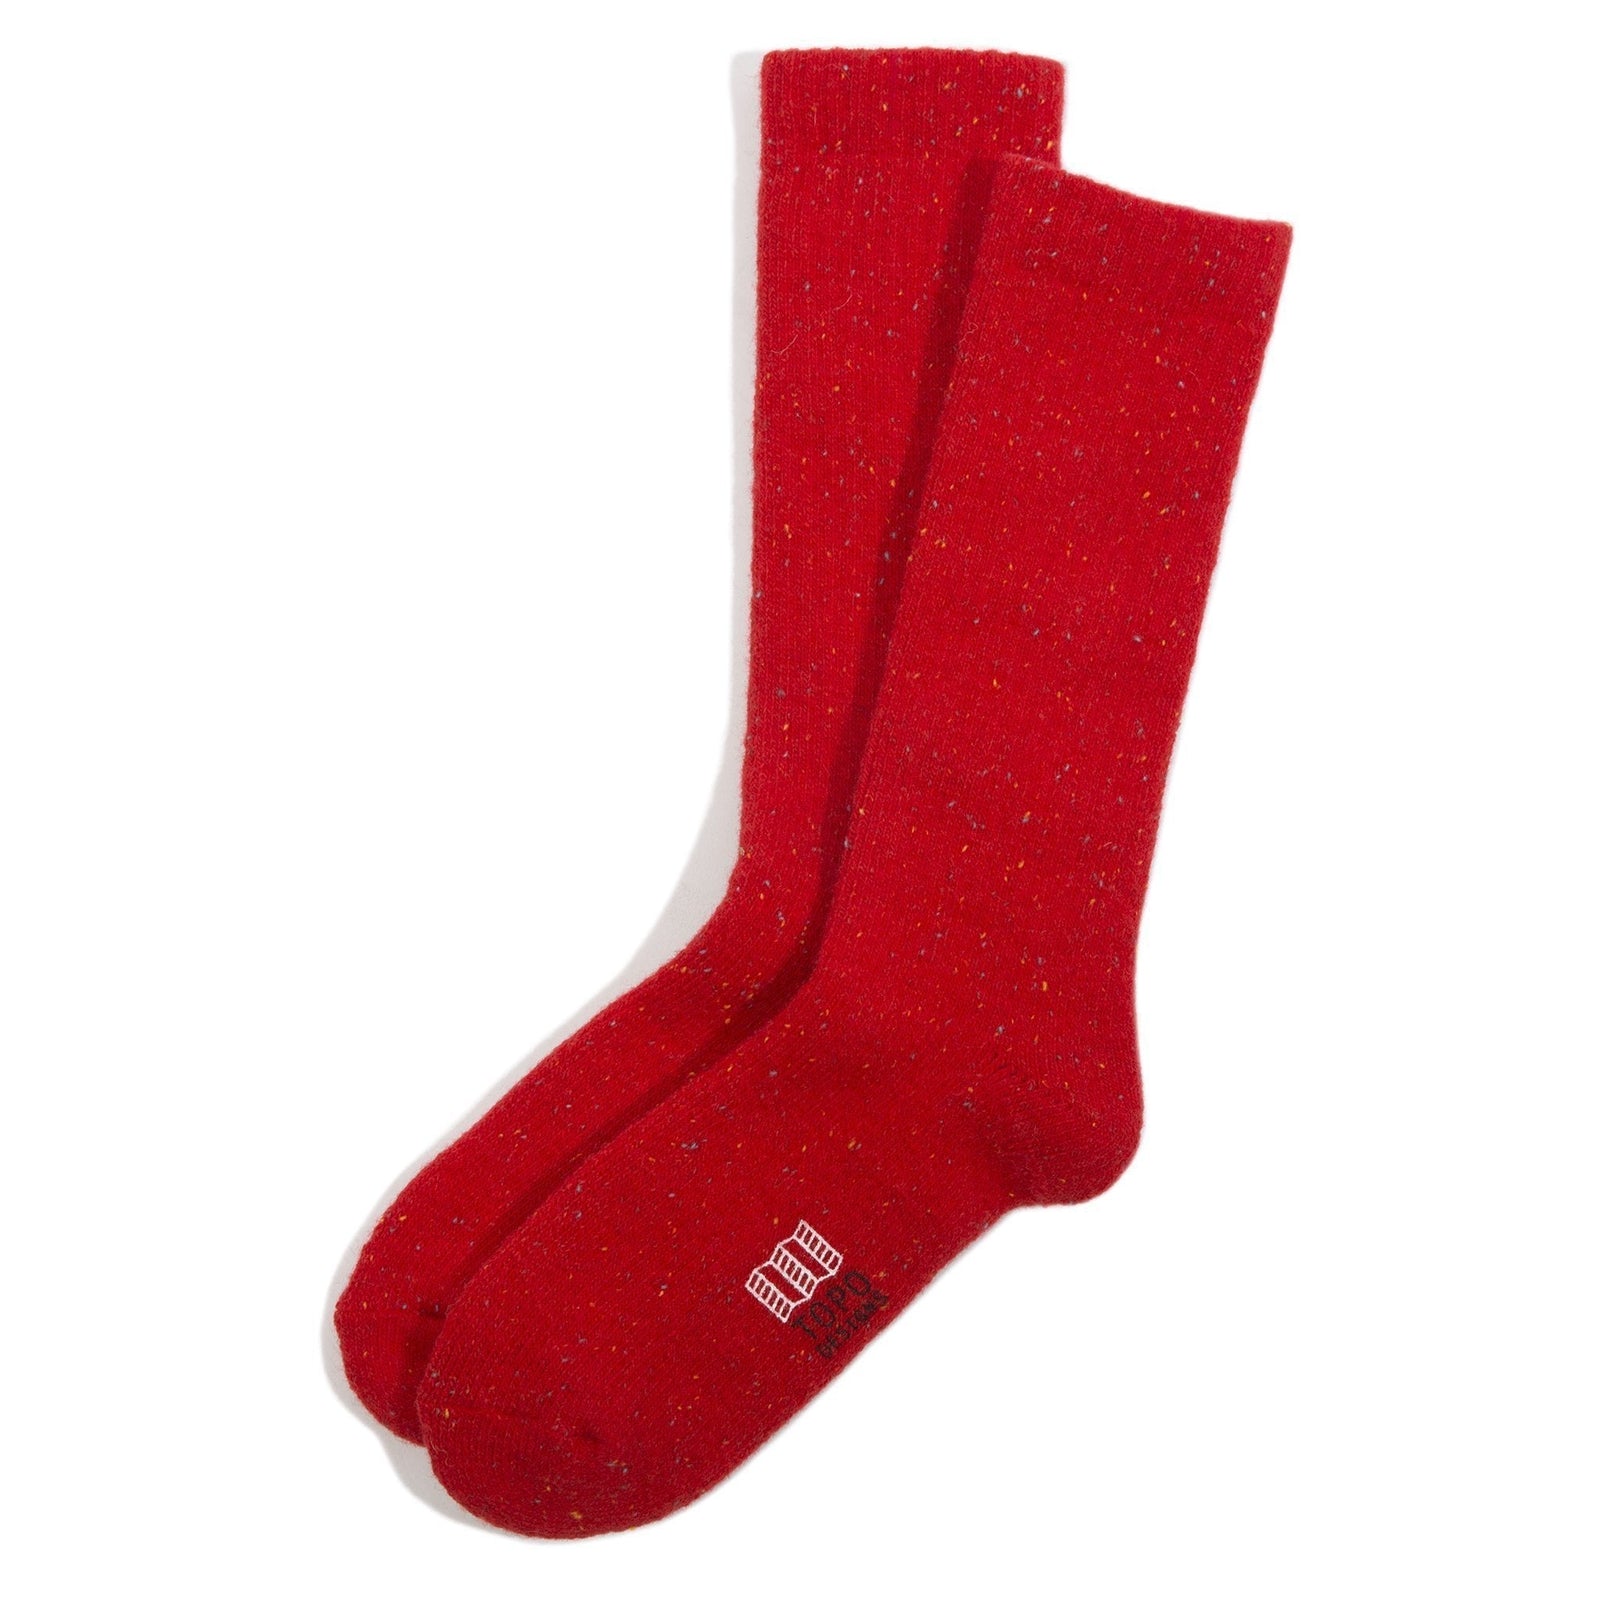 Topo Designs Mountain Socks in "Red" 